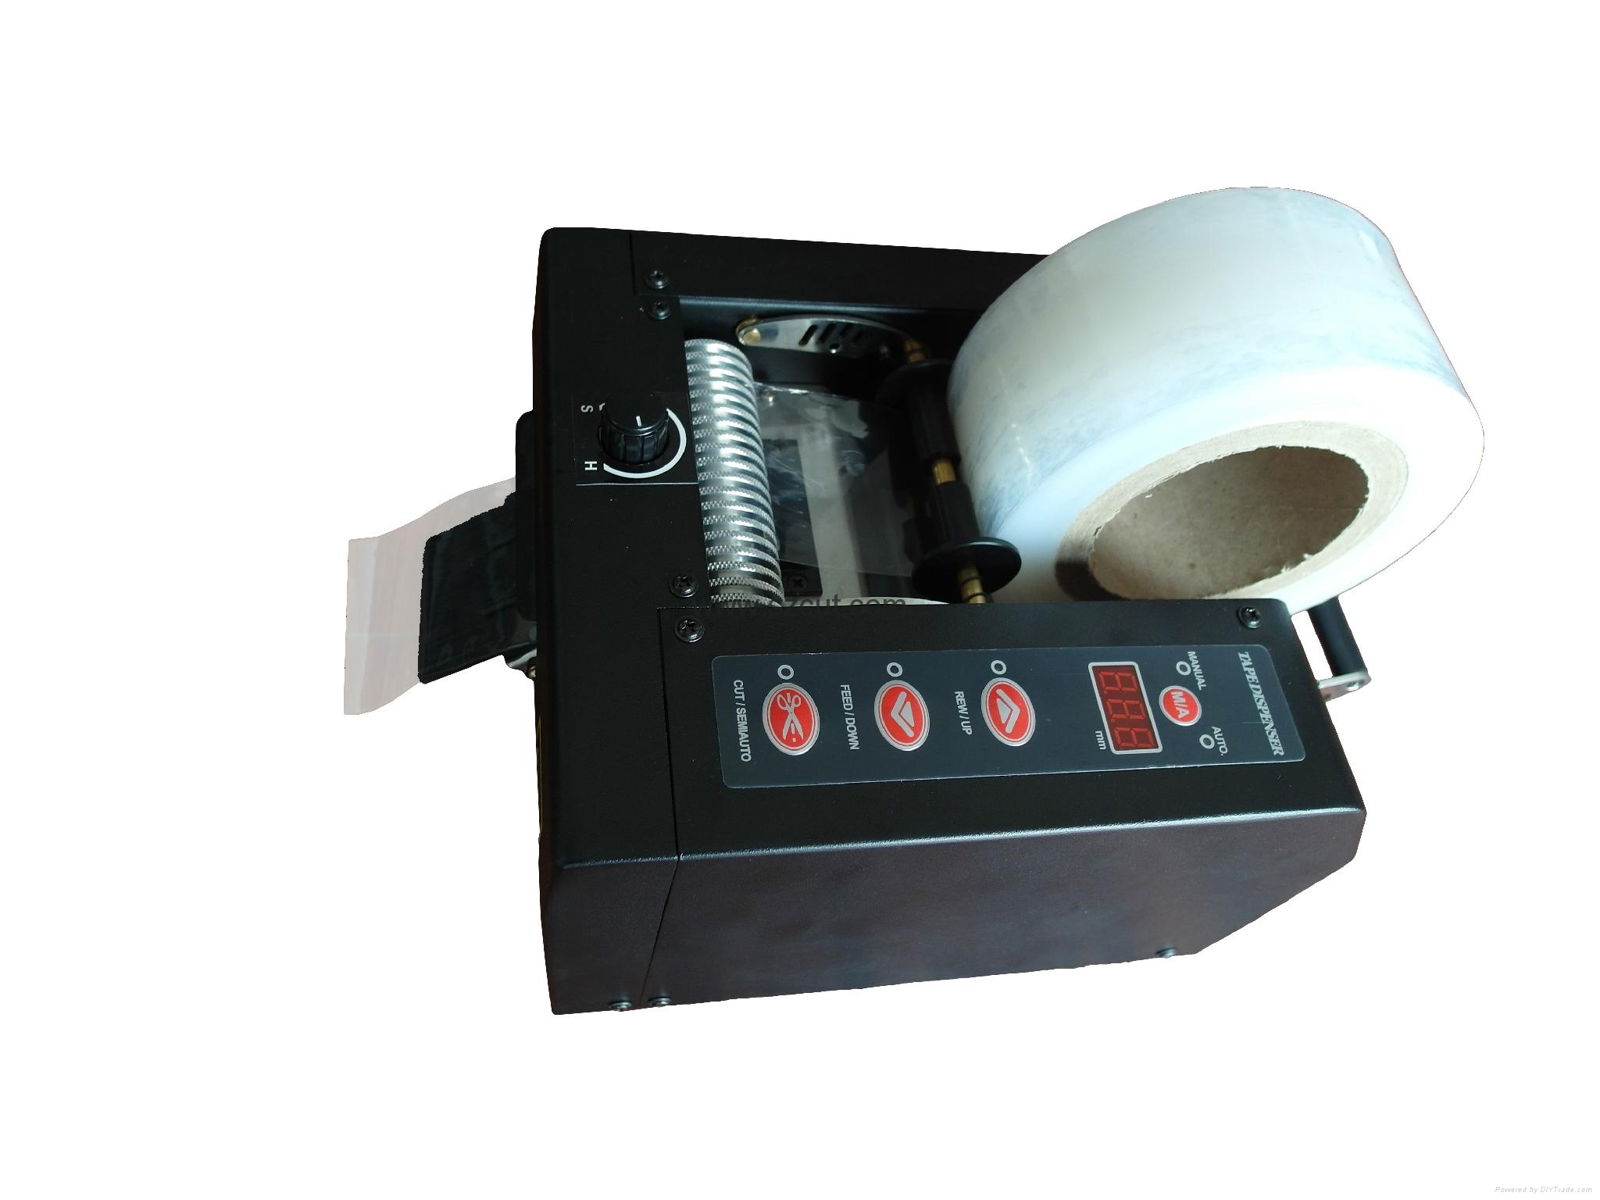  MTC-080 Automatic Tape Dispenser 2